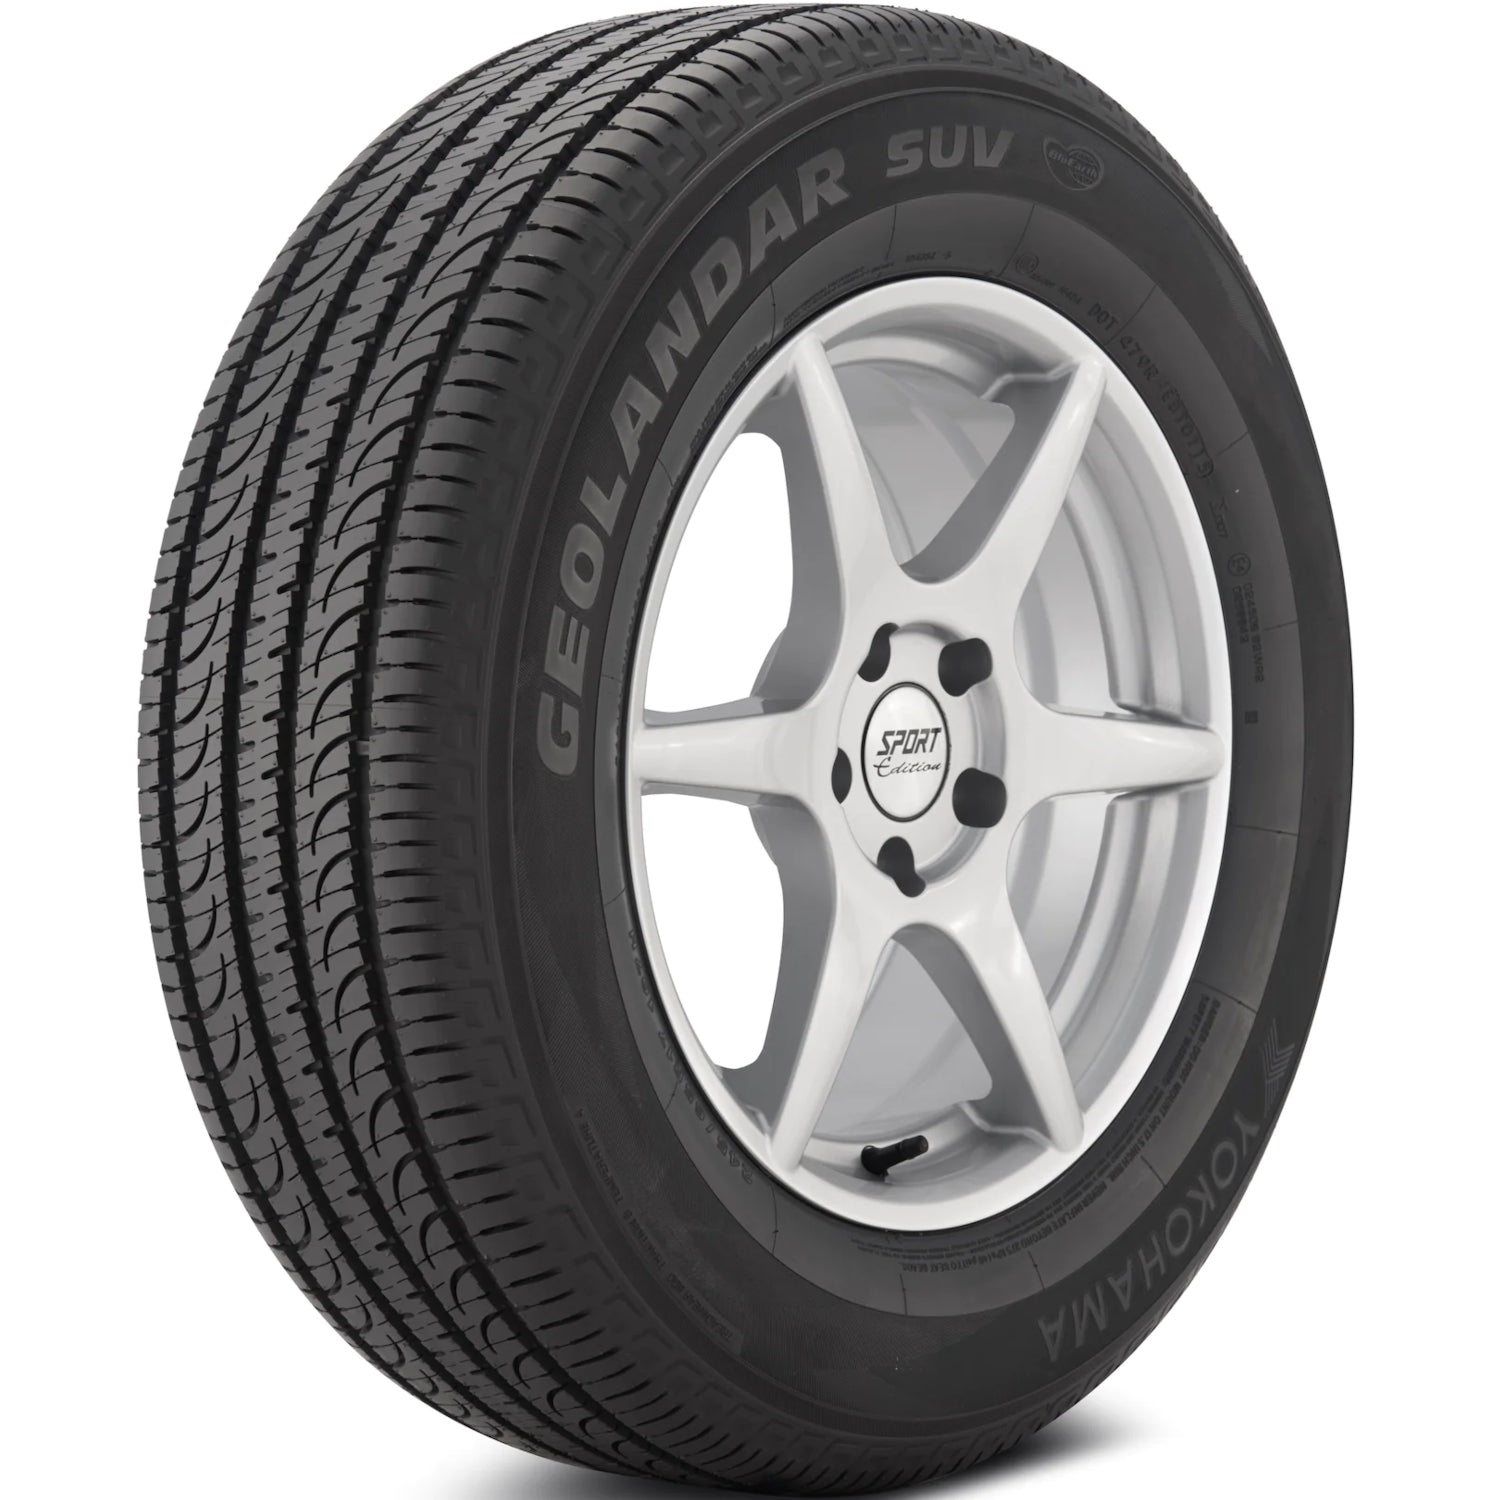 YOKOHAMA GEOLANDAR G055 225/60R18 (28.5X8.9R 18) Tires